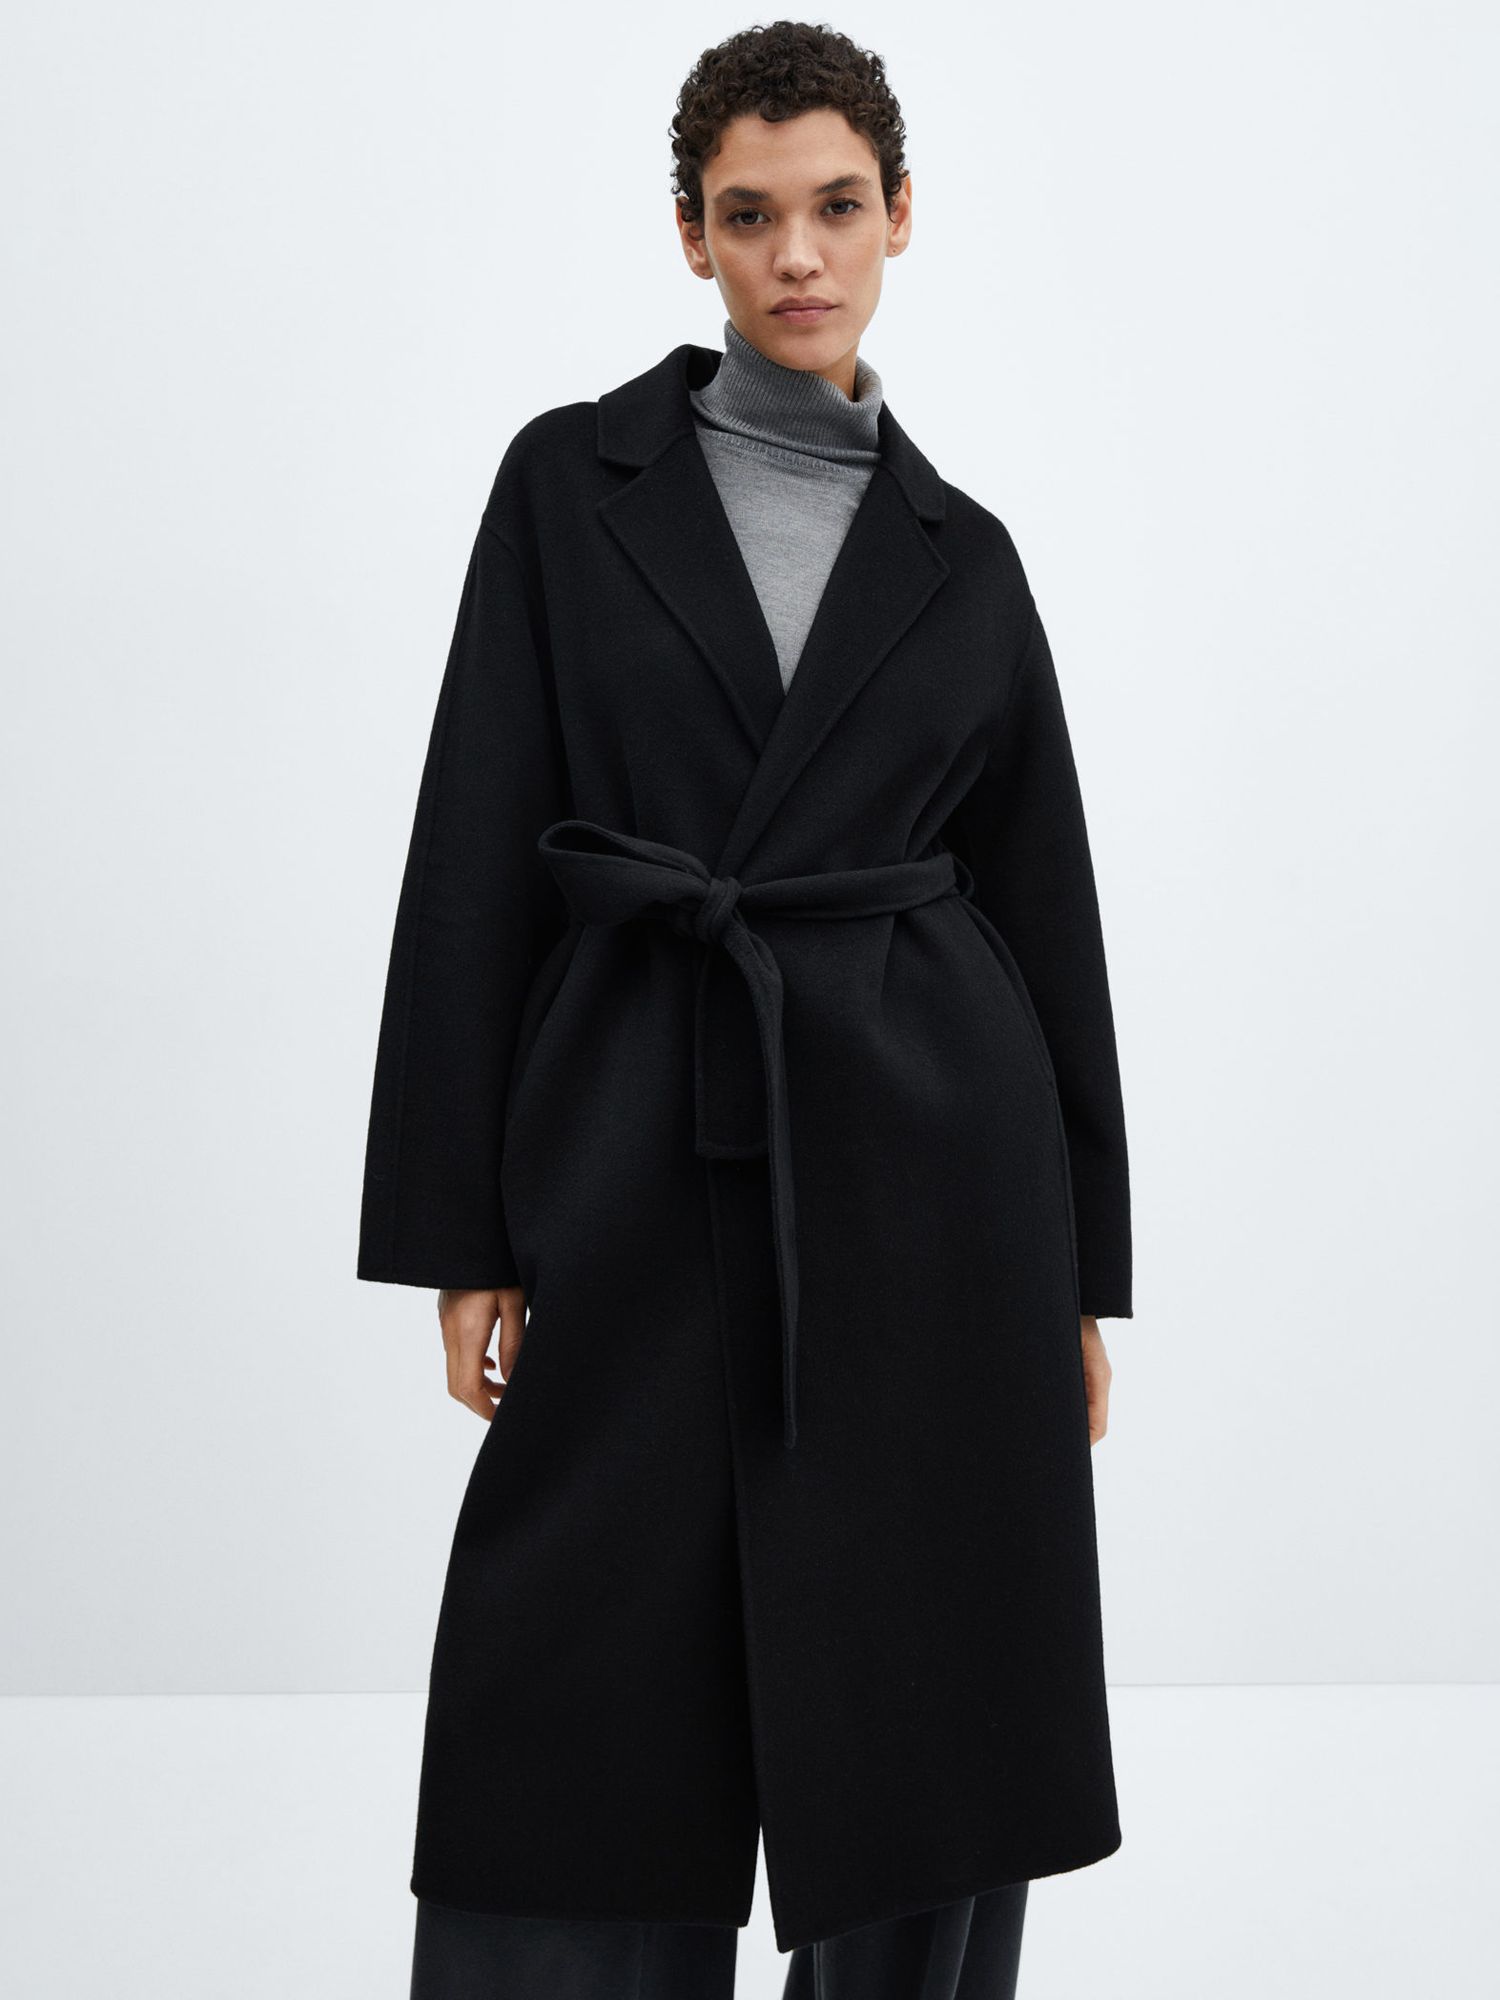 Mango Batin Wool Blend Coat, Black at John Lewis & Partners